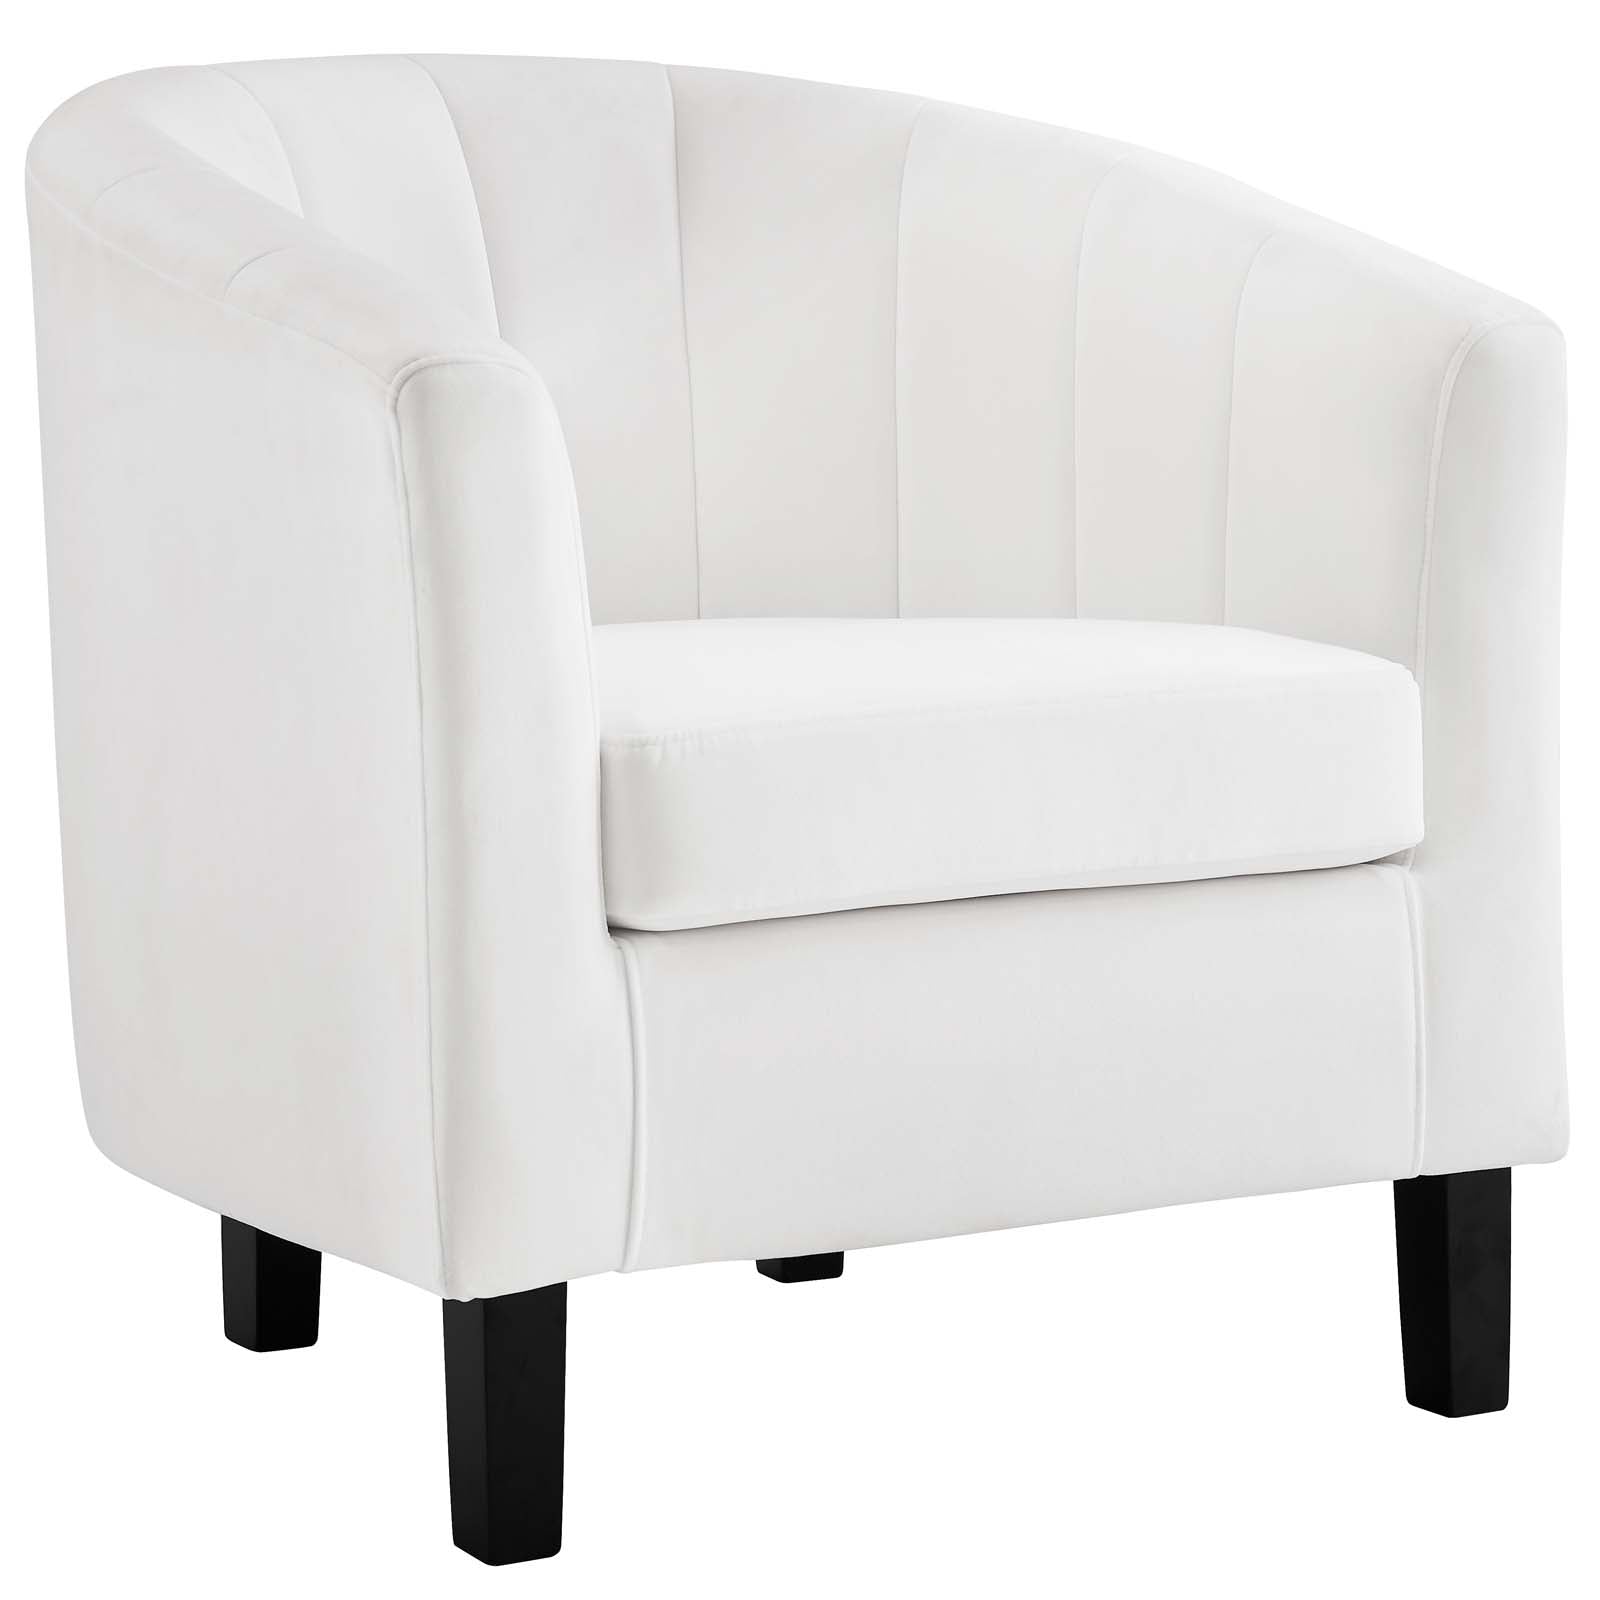 Modway Living Room Sets - Prospect Channel Tufted 3 Piece Performance Velvet Set White